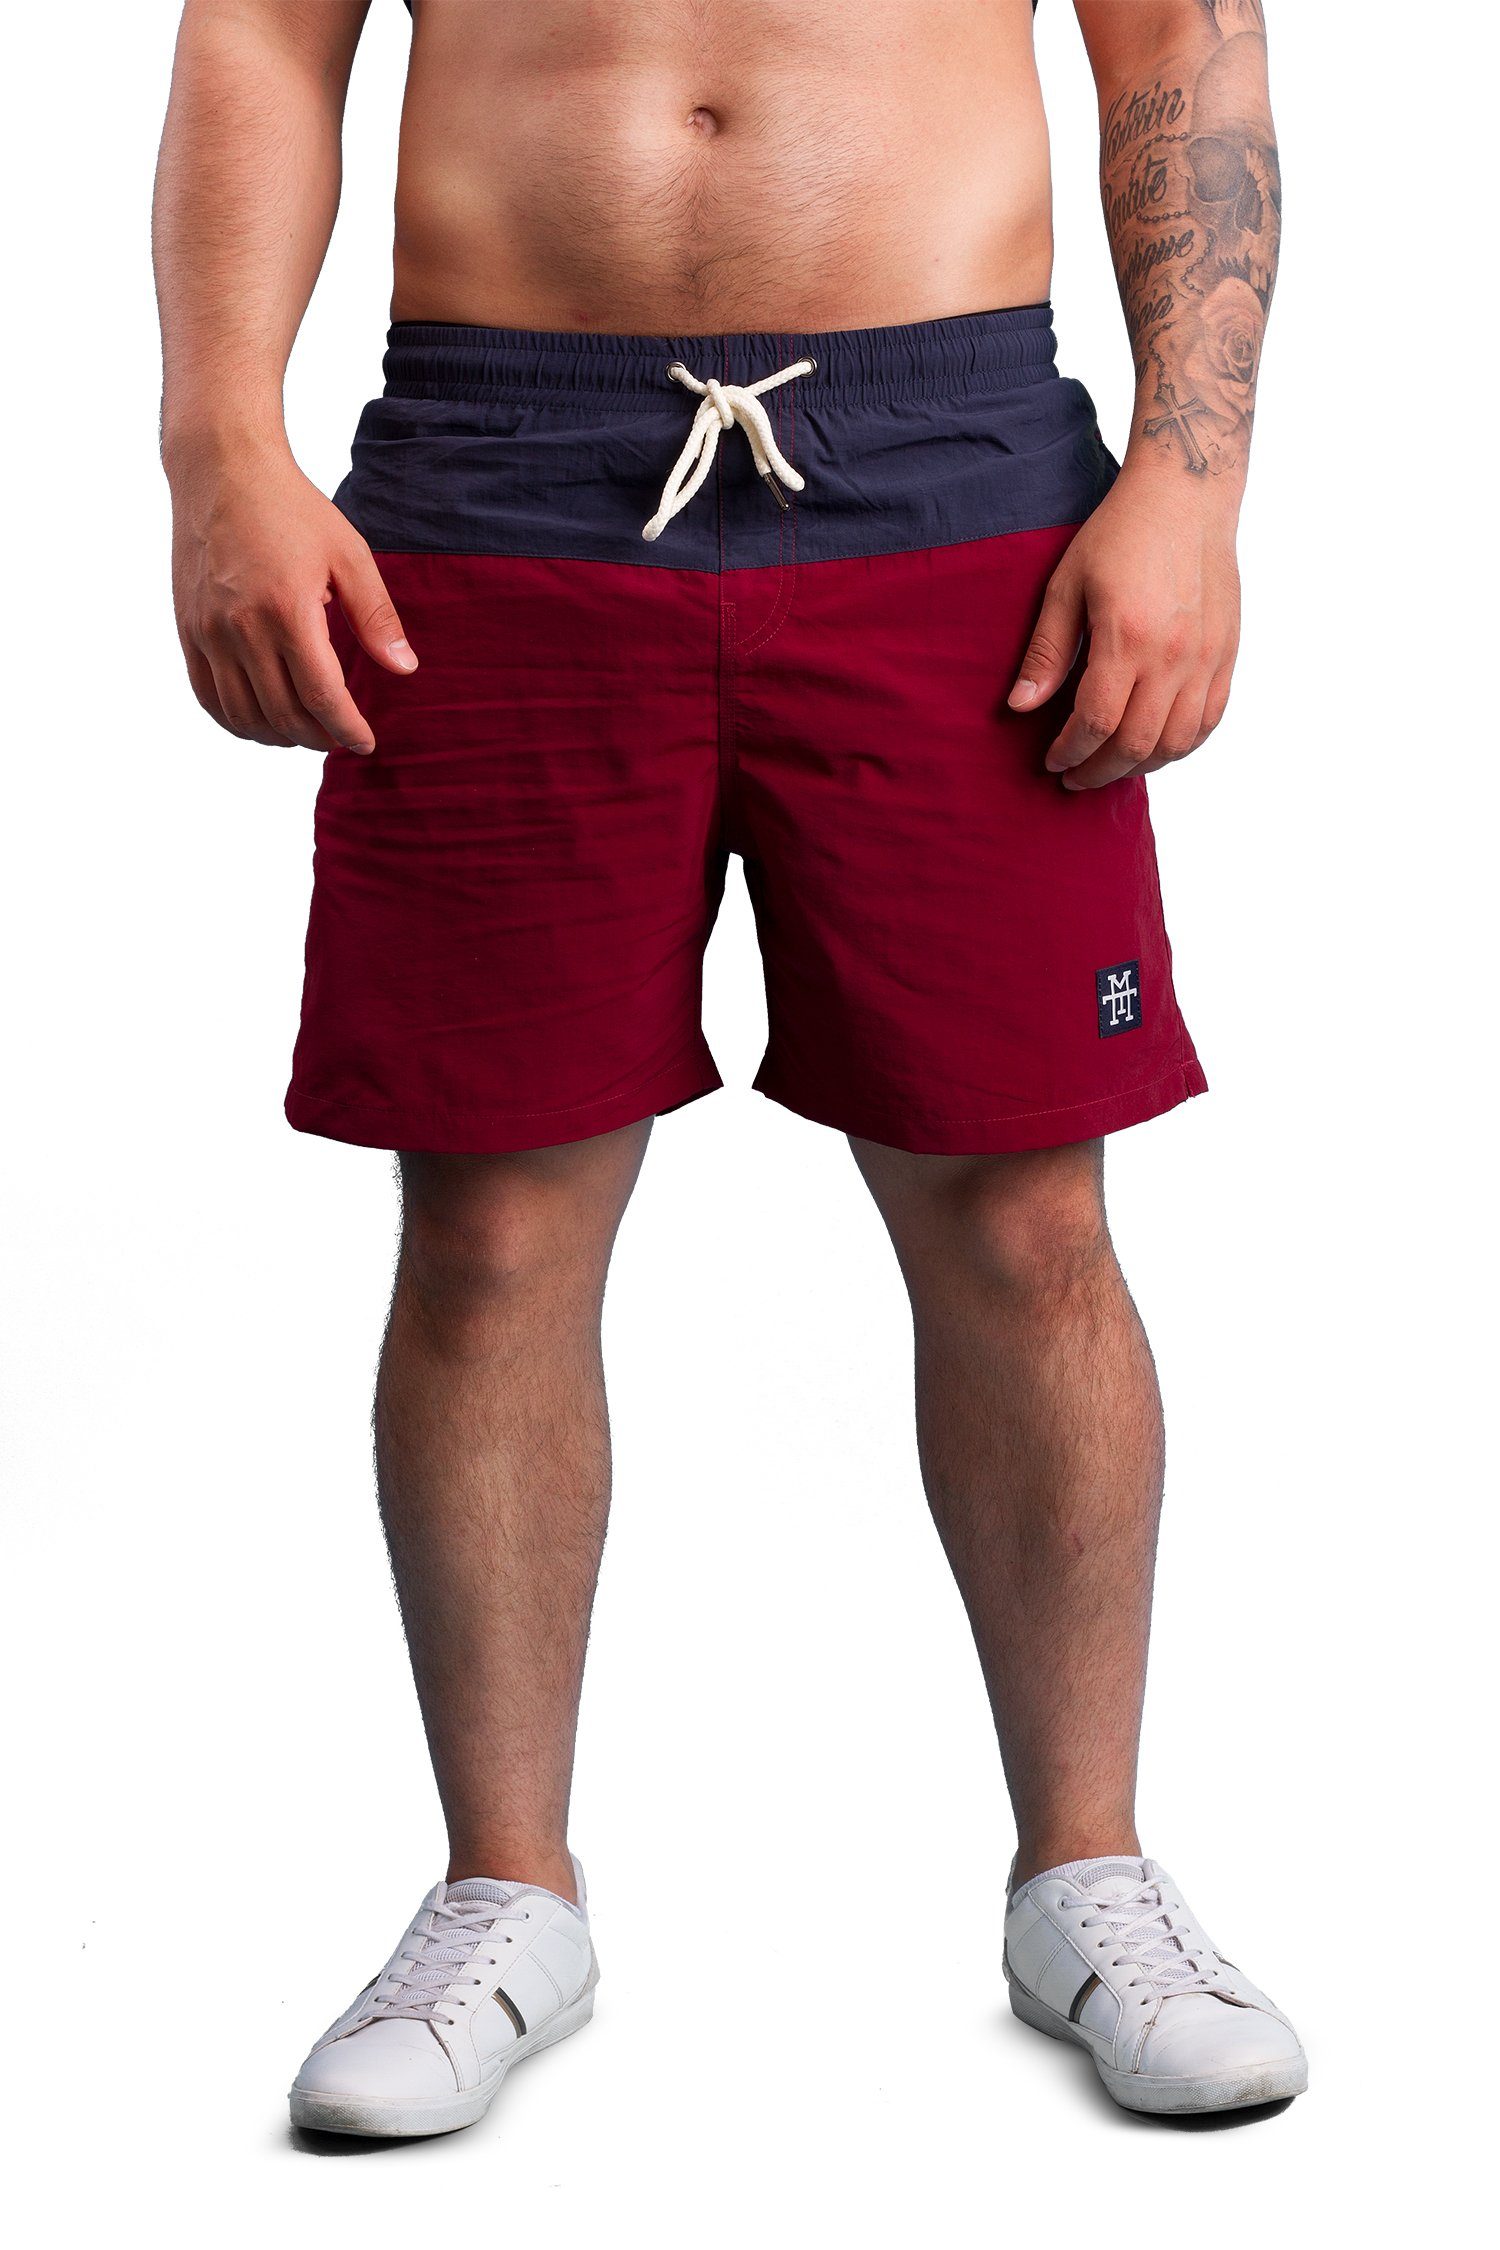 Red/Navy Shorts - Manufaktur13 Swim Badeshorts Badehosen schnelltrocknend